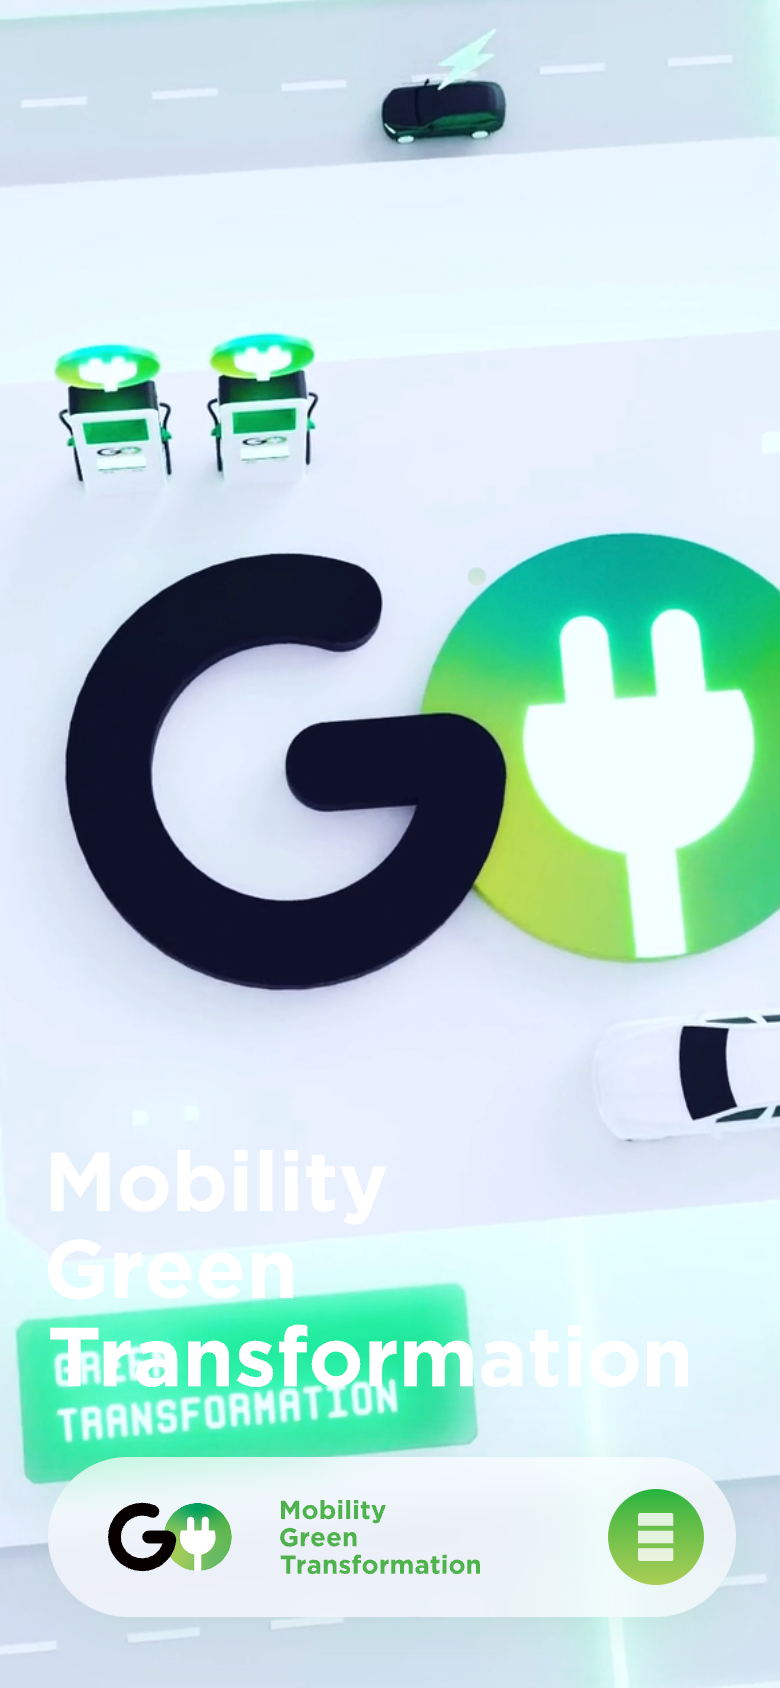 GO株式会社の脱炭素サービスGX（グリーントランスフォーメーション）のスマートフォンでみたファーストビューの画像